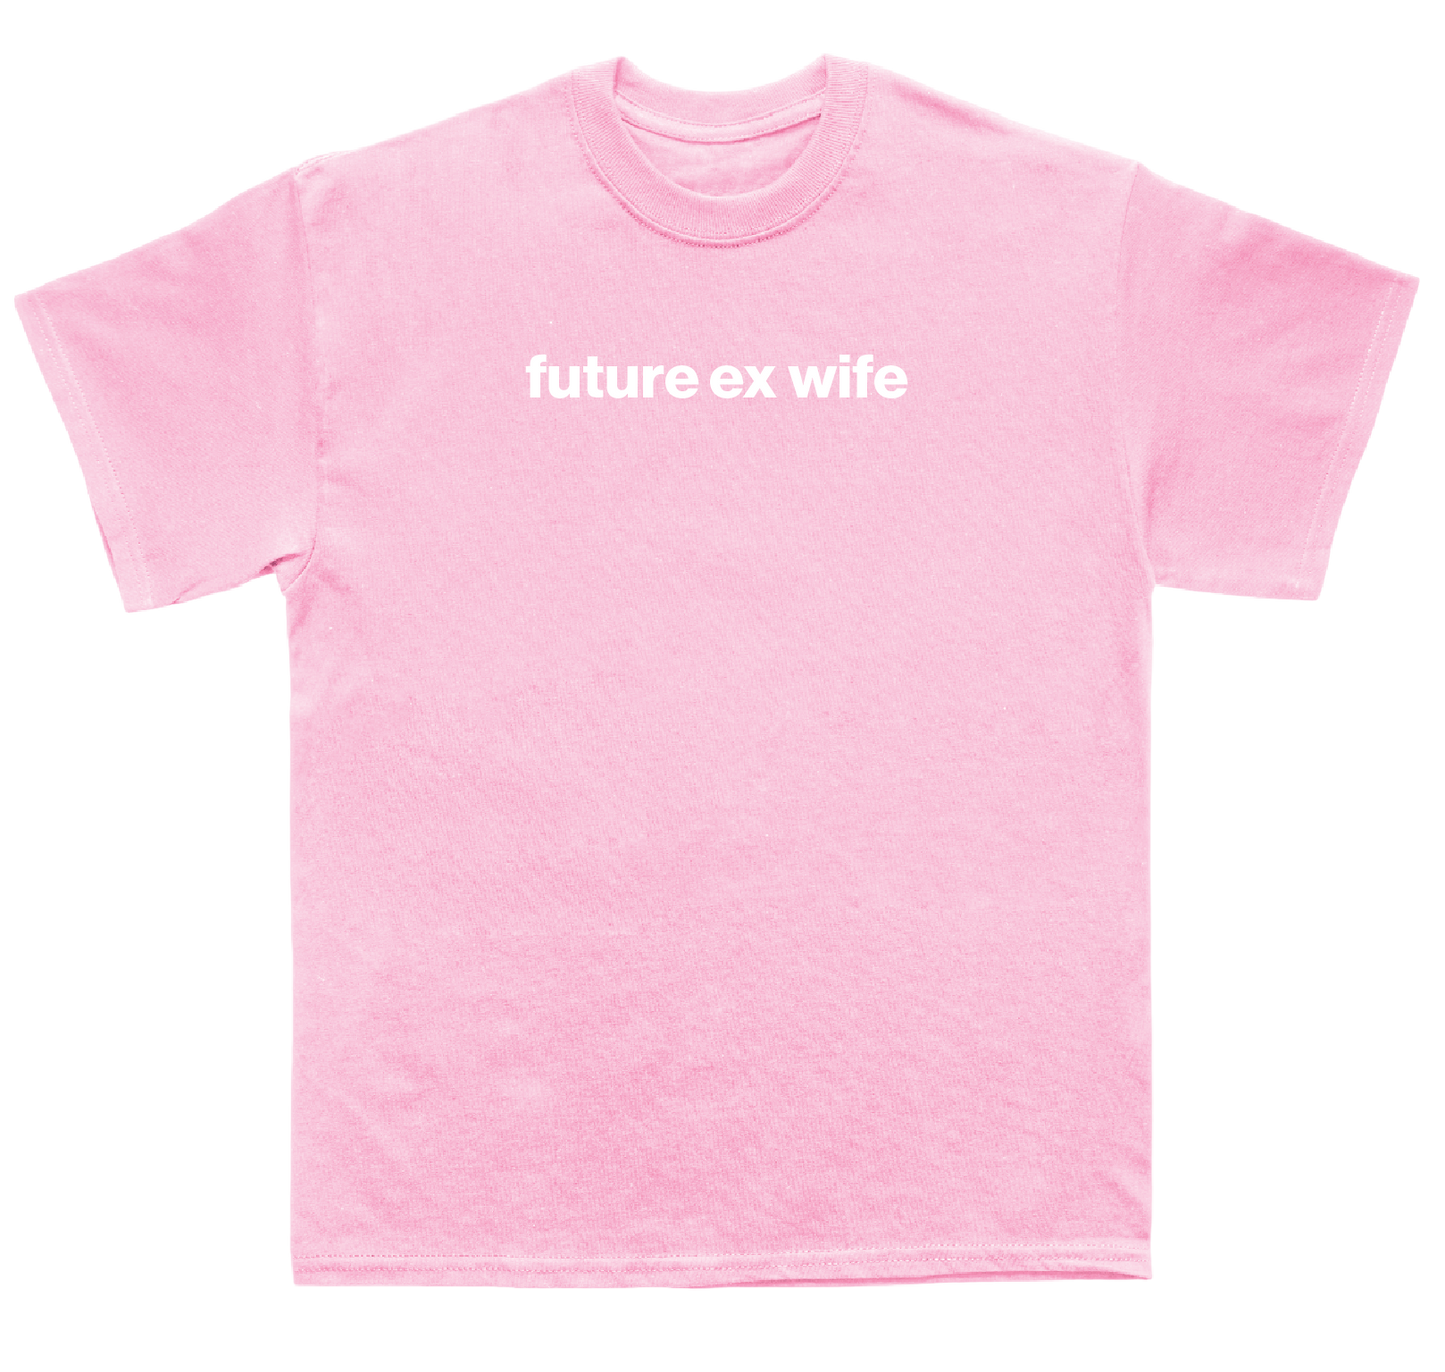 future ex wife shirt